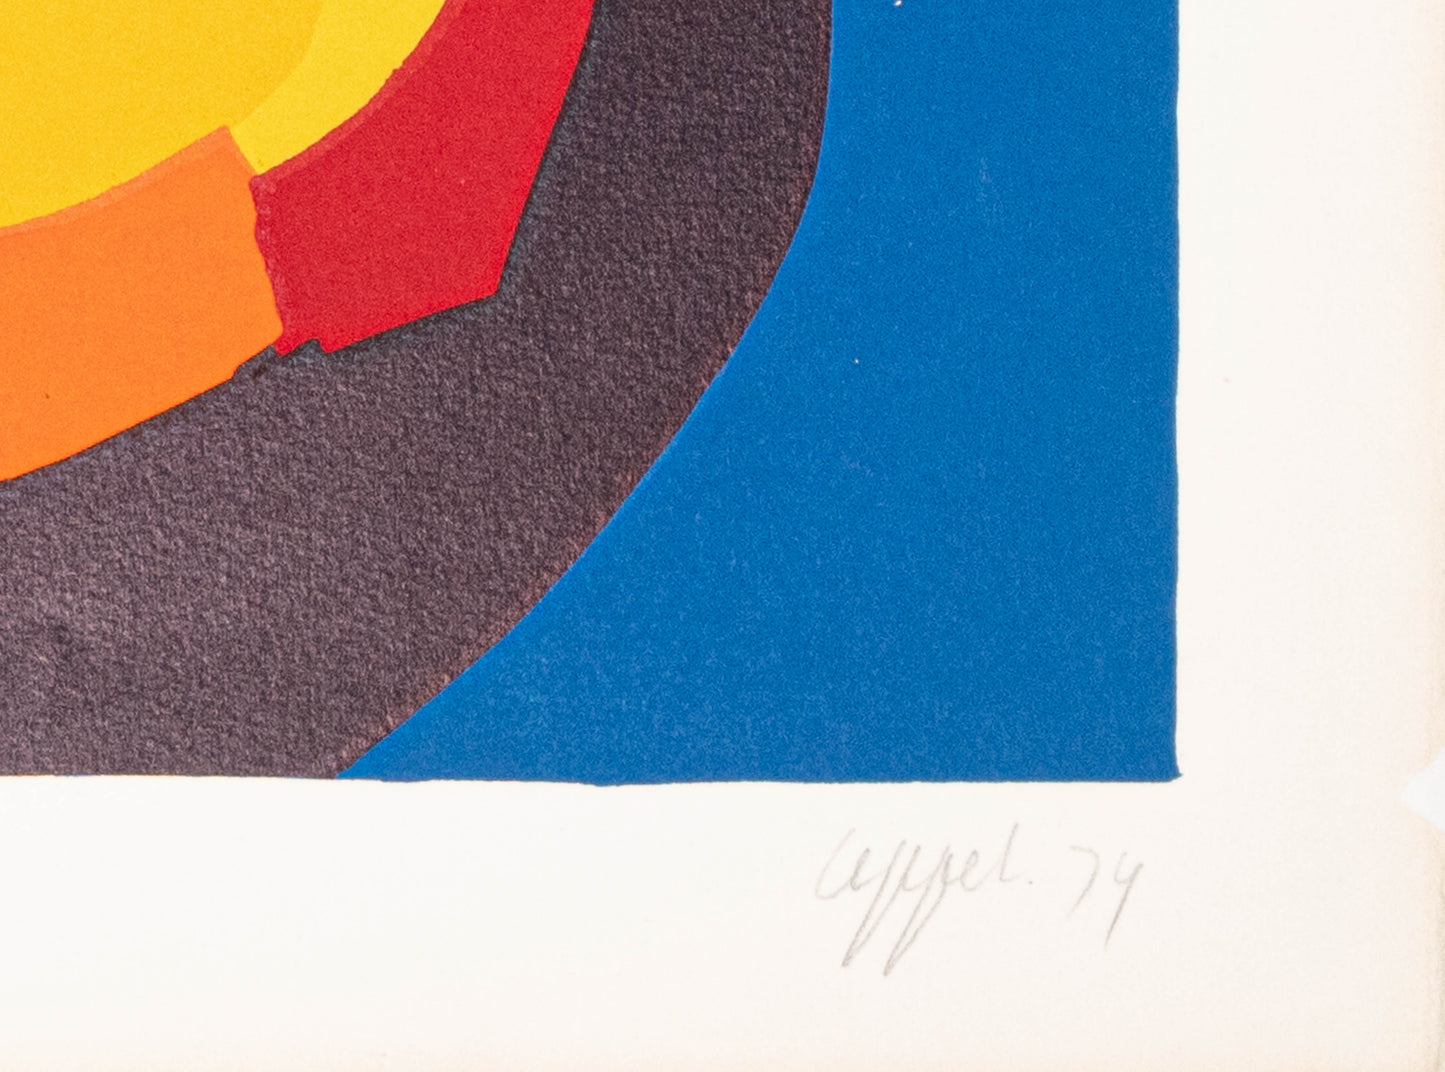 Sunshine Face #6 from Sunshine People by Karel Appel, 1974 - Mourlot Editions - Fine_Art - Poster - Lithograph - Wall Art - Vintage - Prints - Original